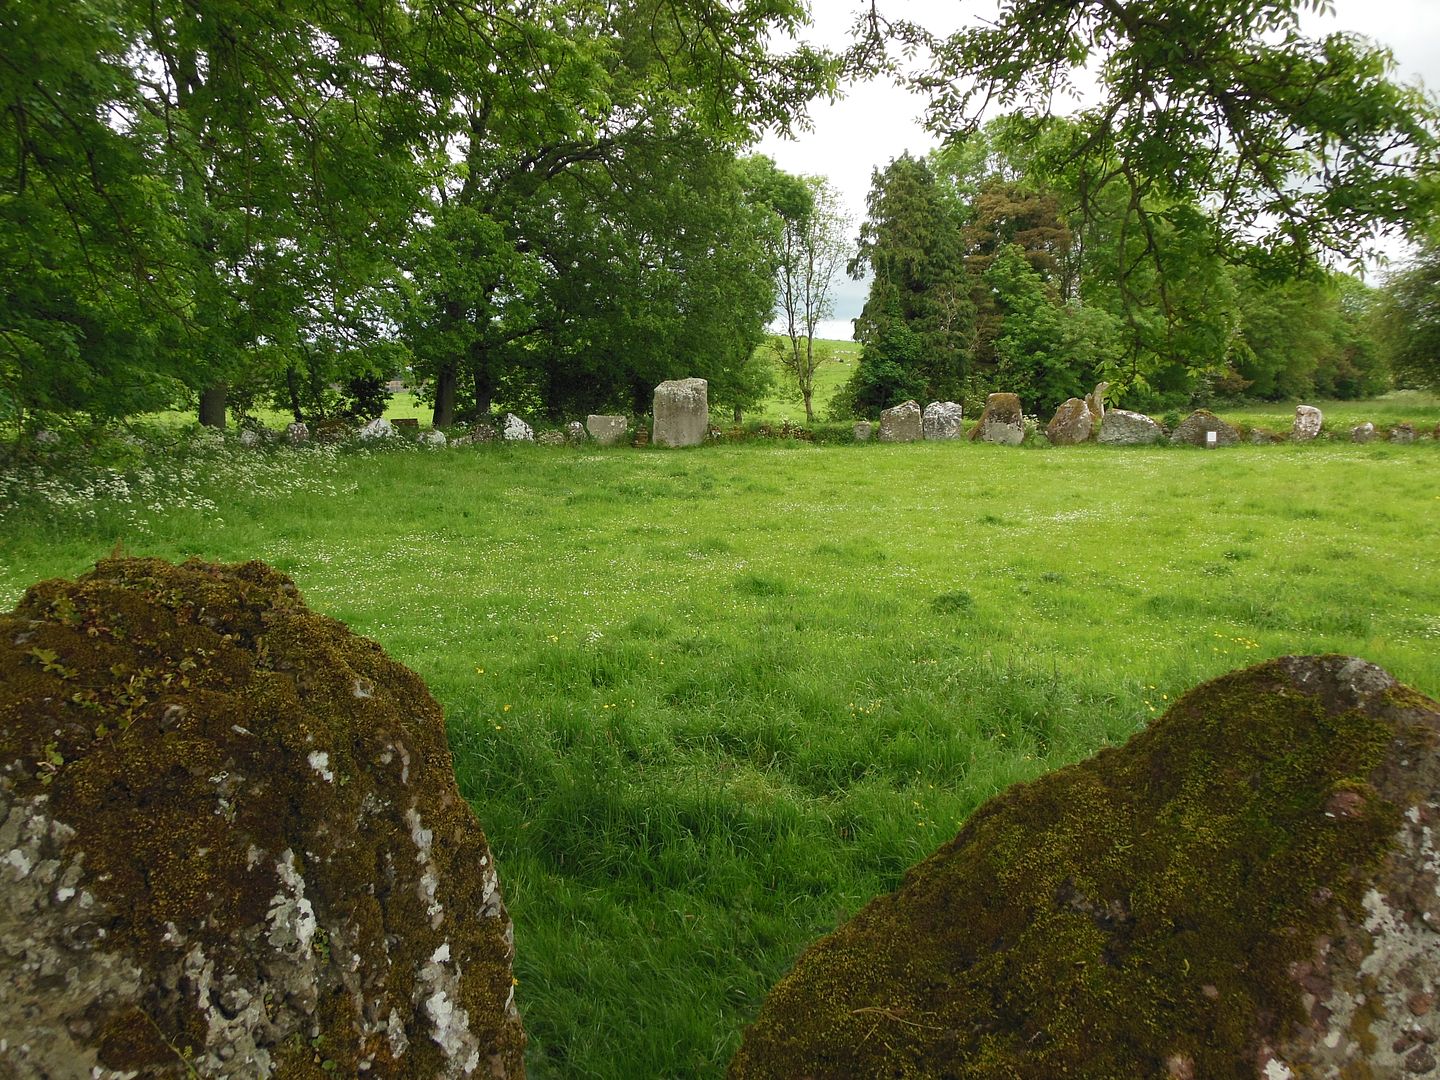 Ireland Stone Circles